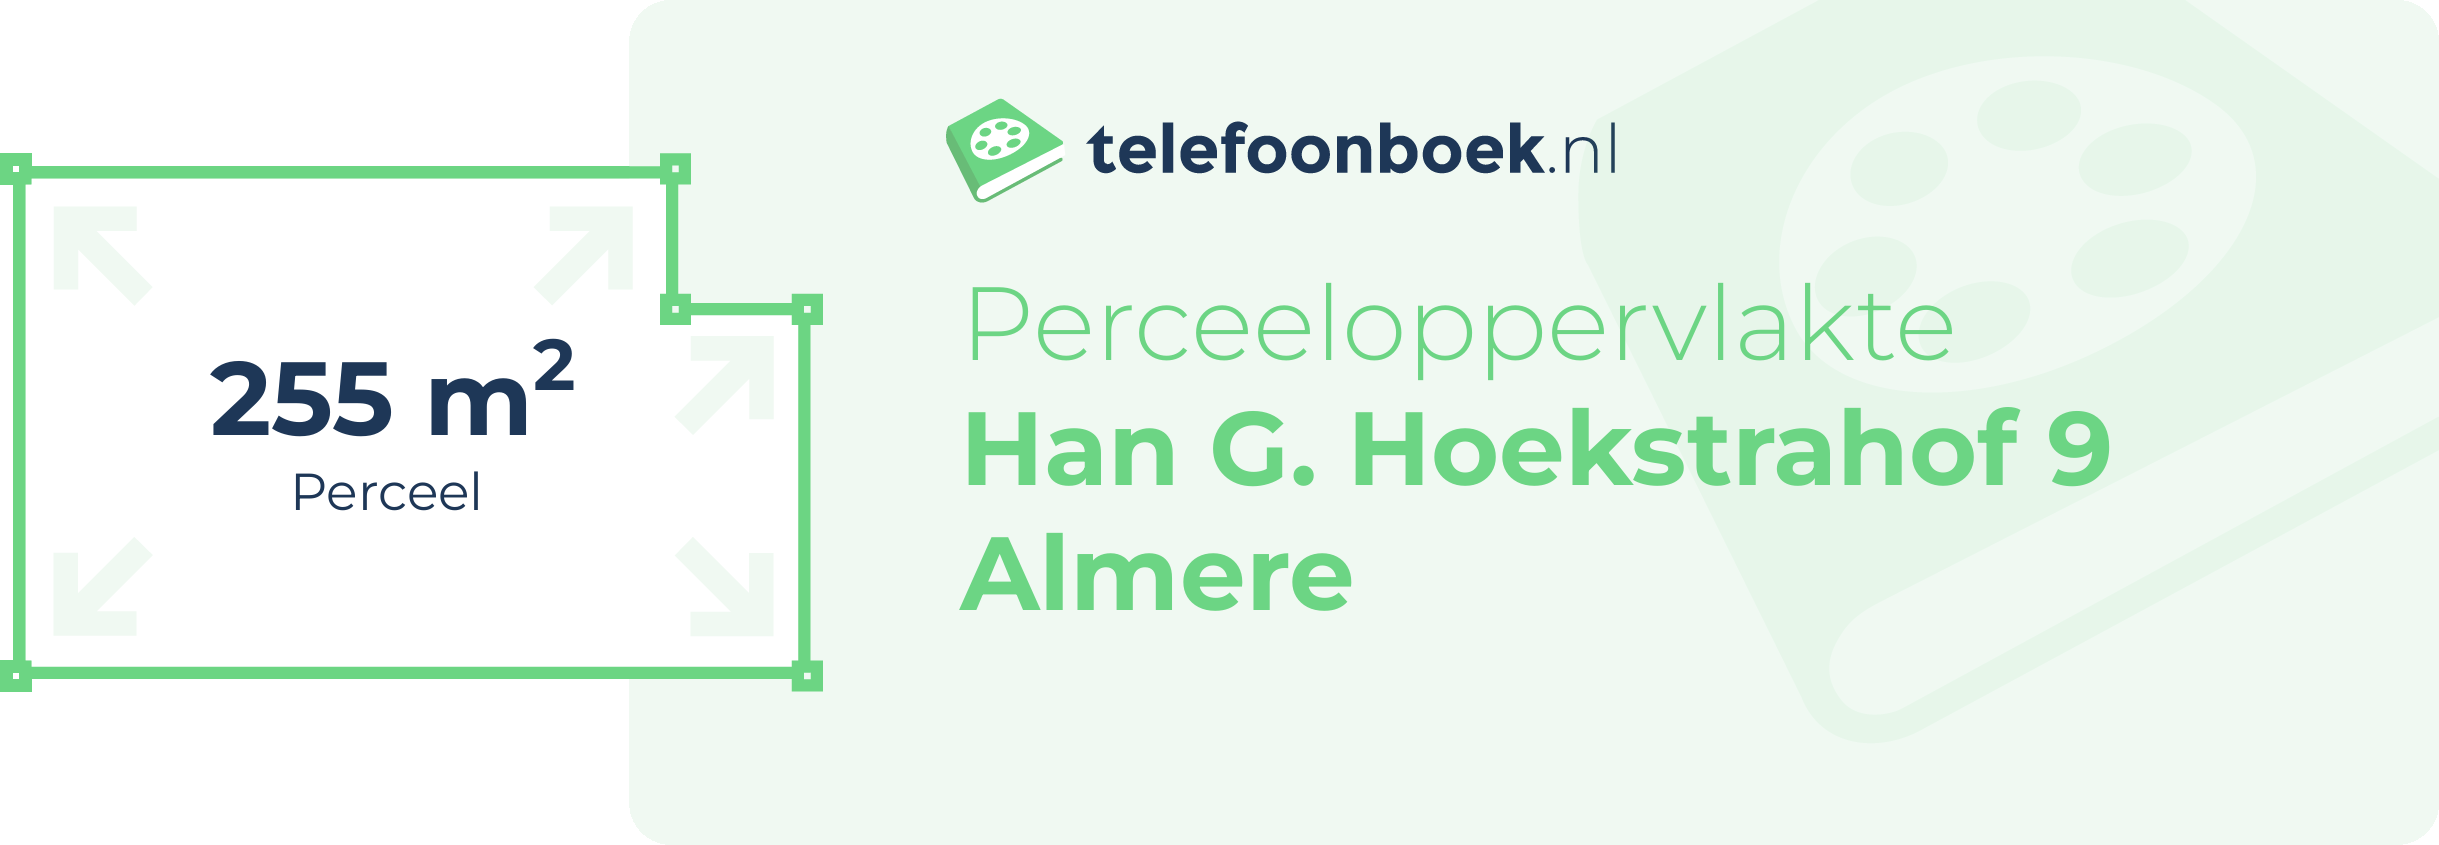 Perceeloppervlakte Han G. Hoekstrahof 9 Almere